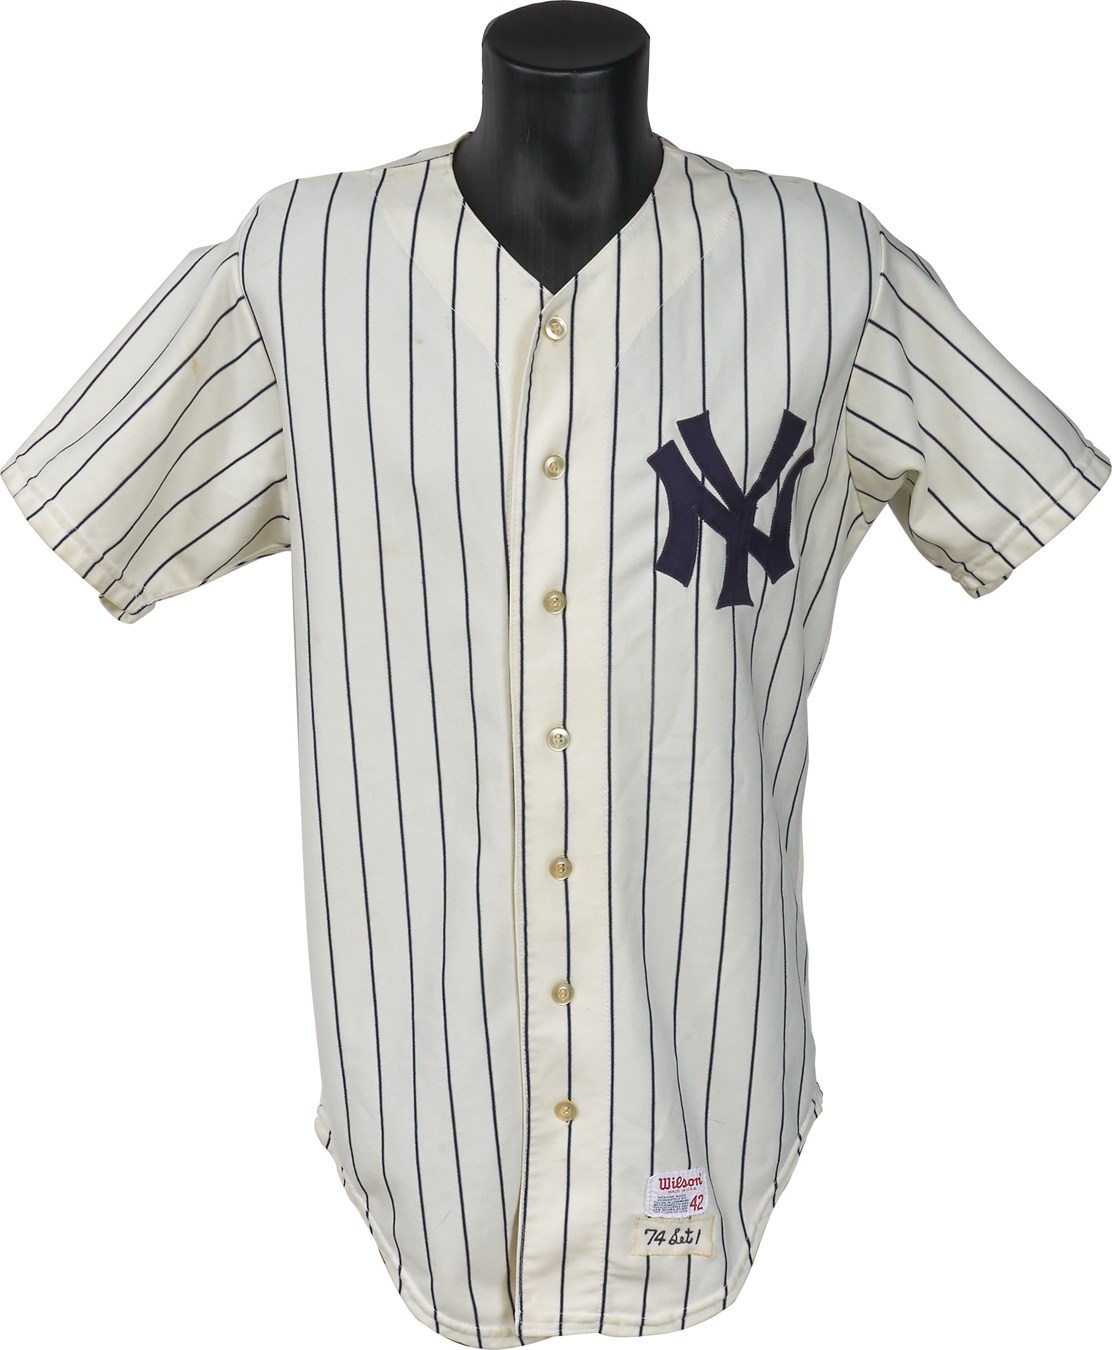 1974 Graig Nettles New York Yankees Game Worn Jersey